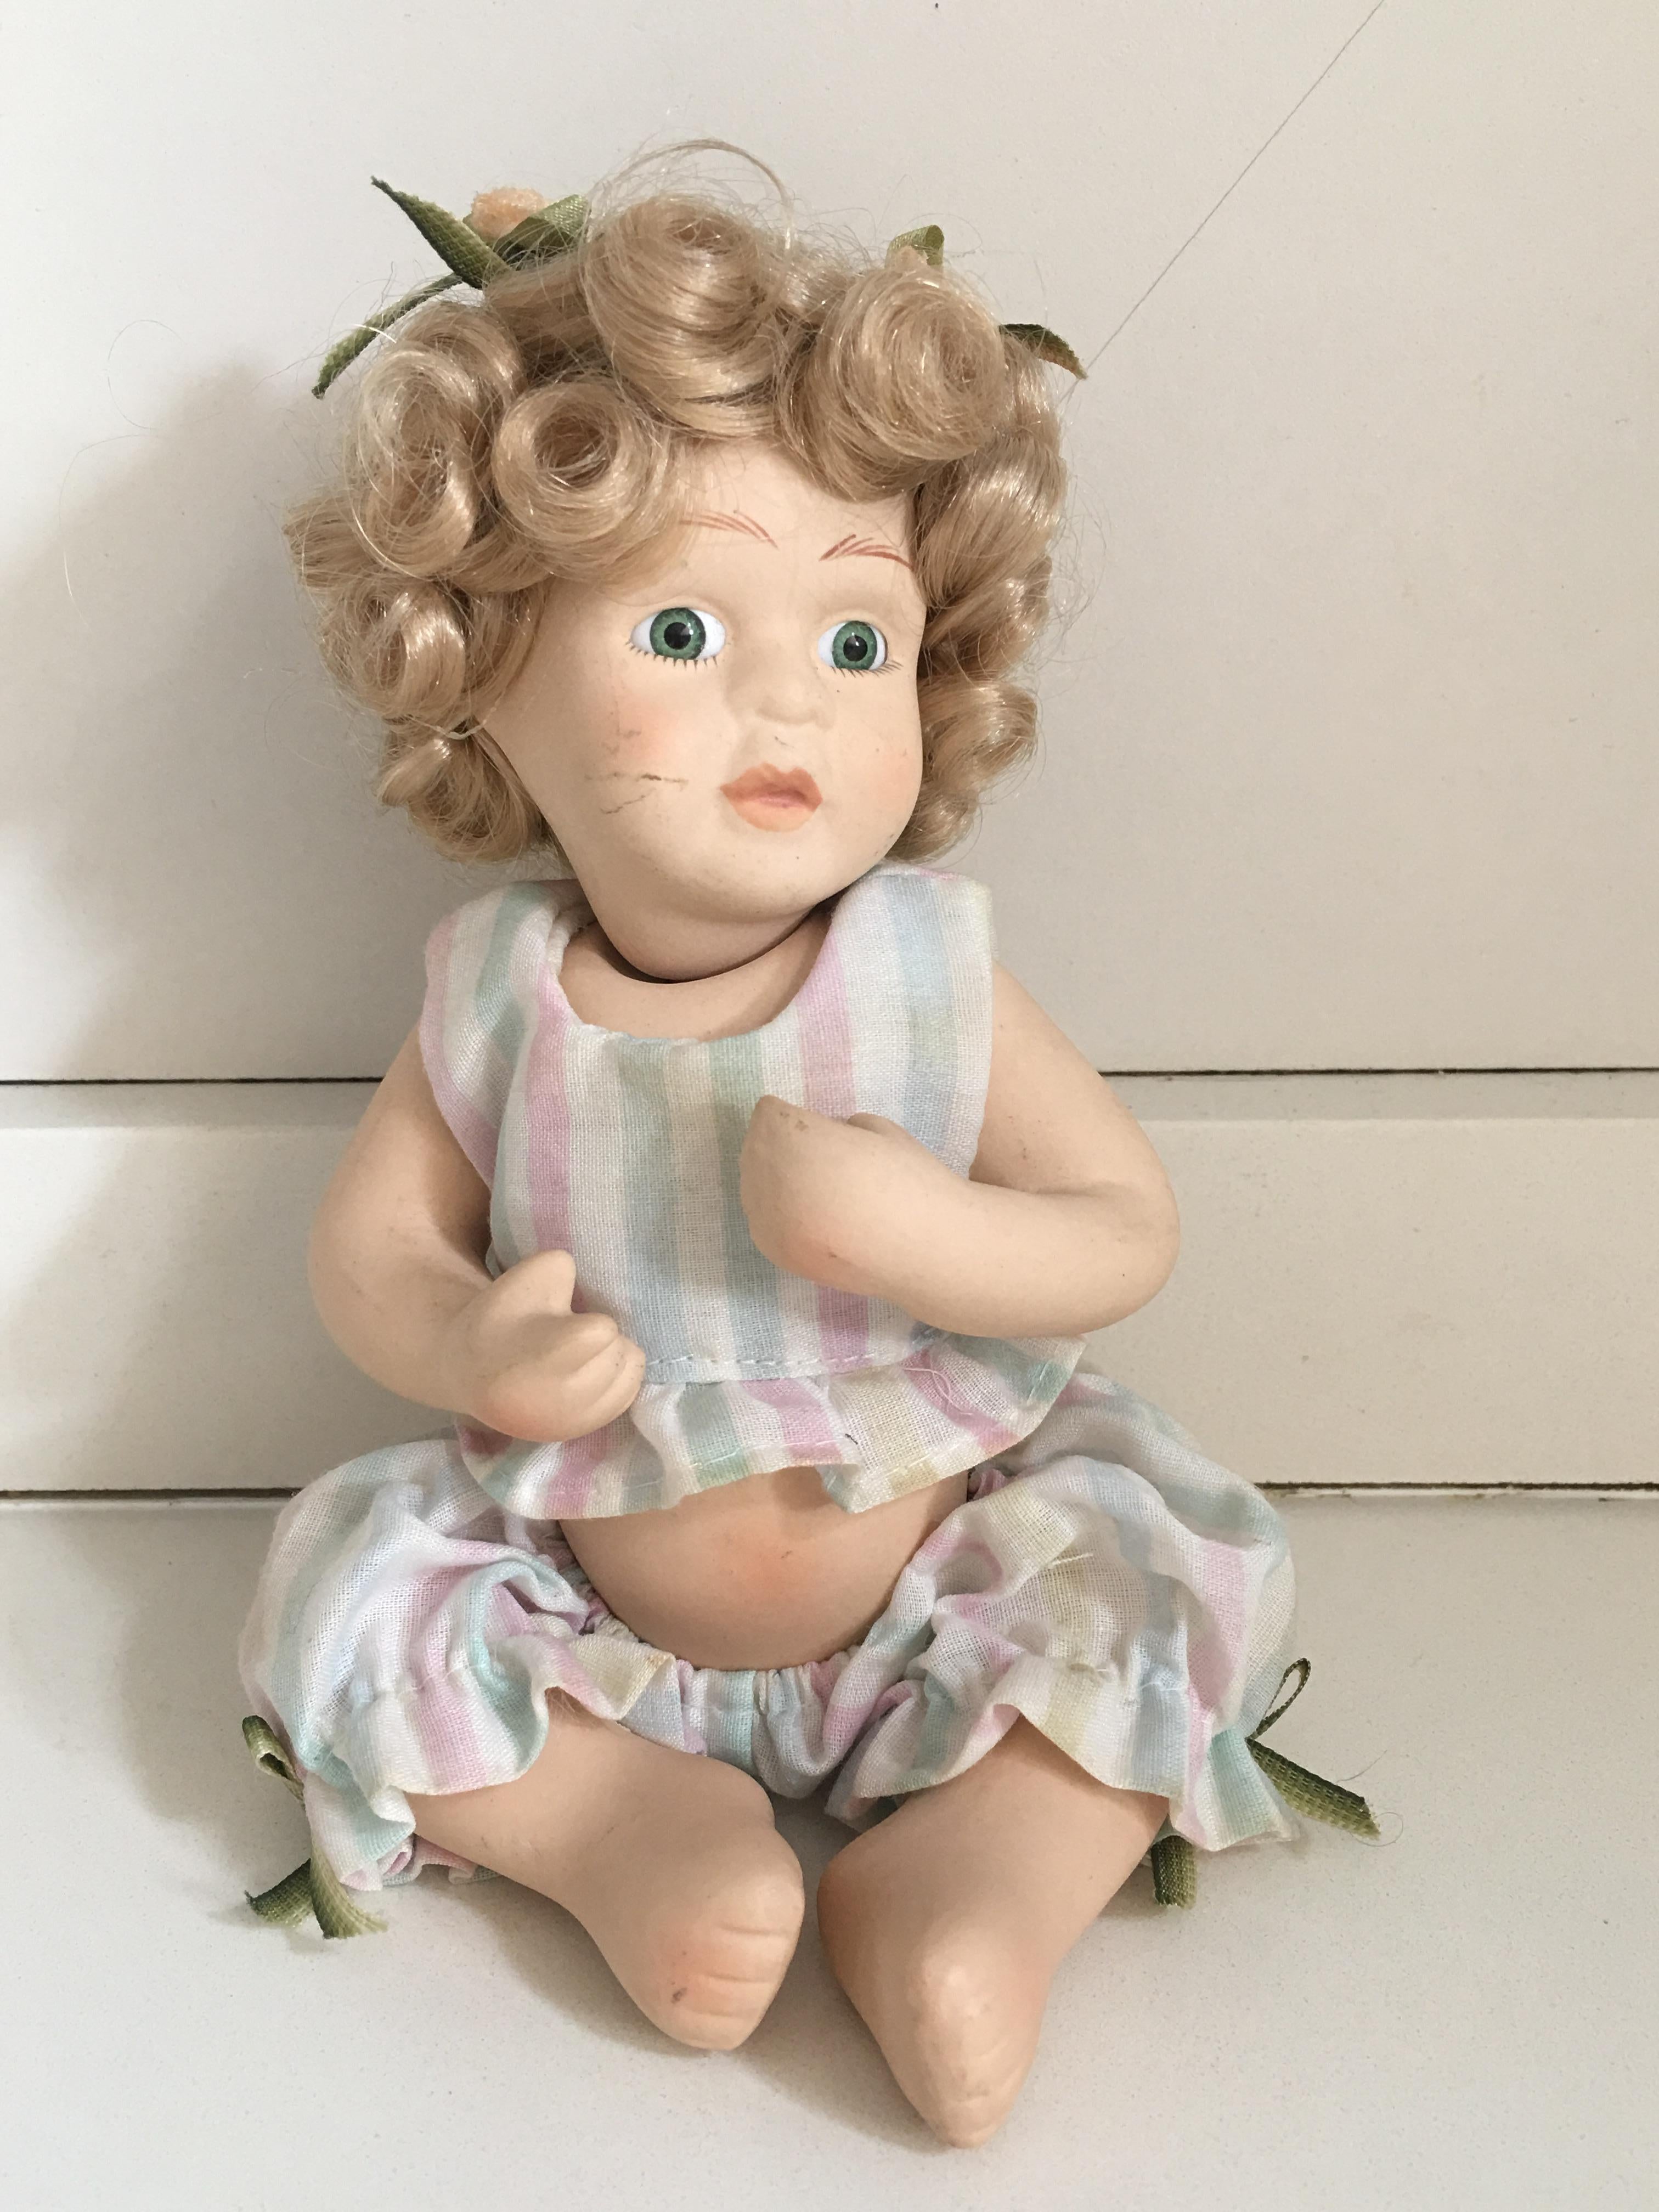 Midcentury Antique Bisque Porcelain Doll.
 